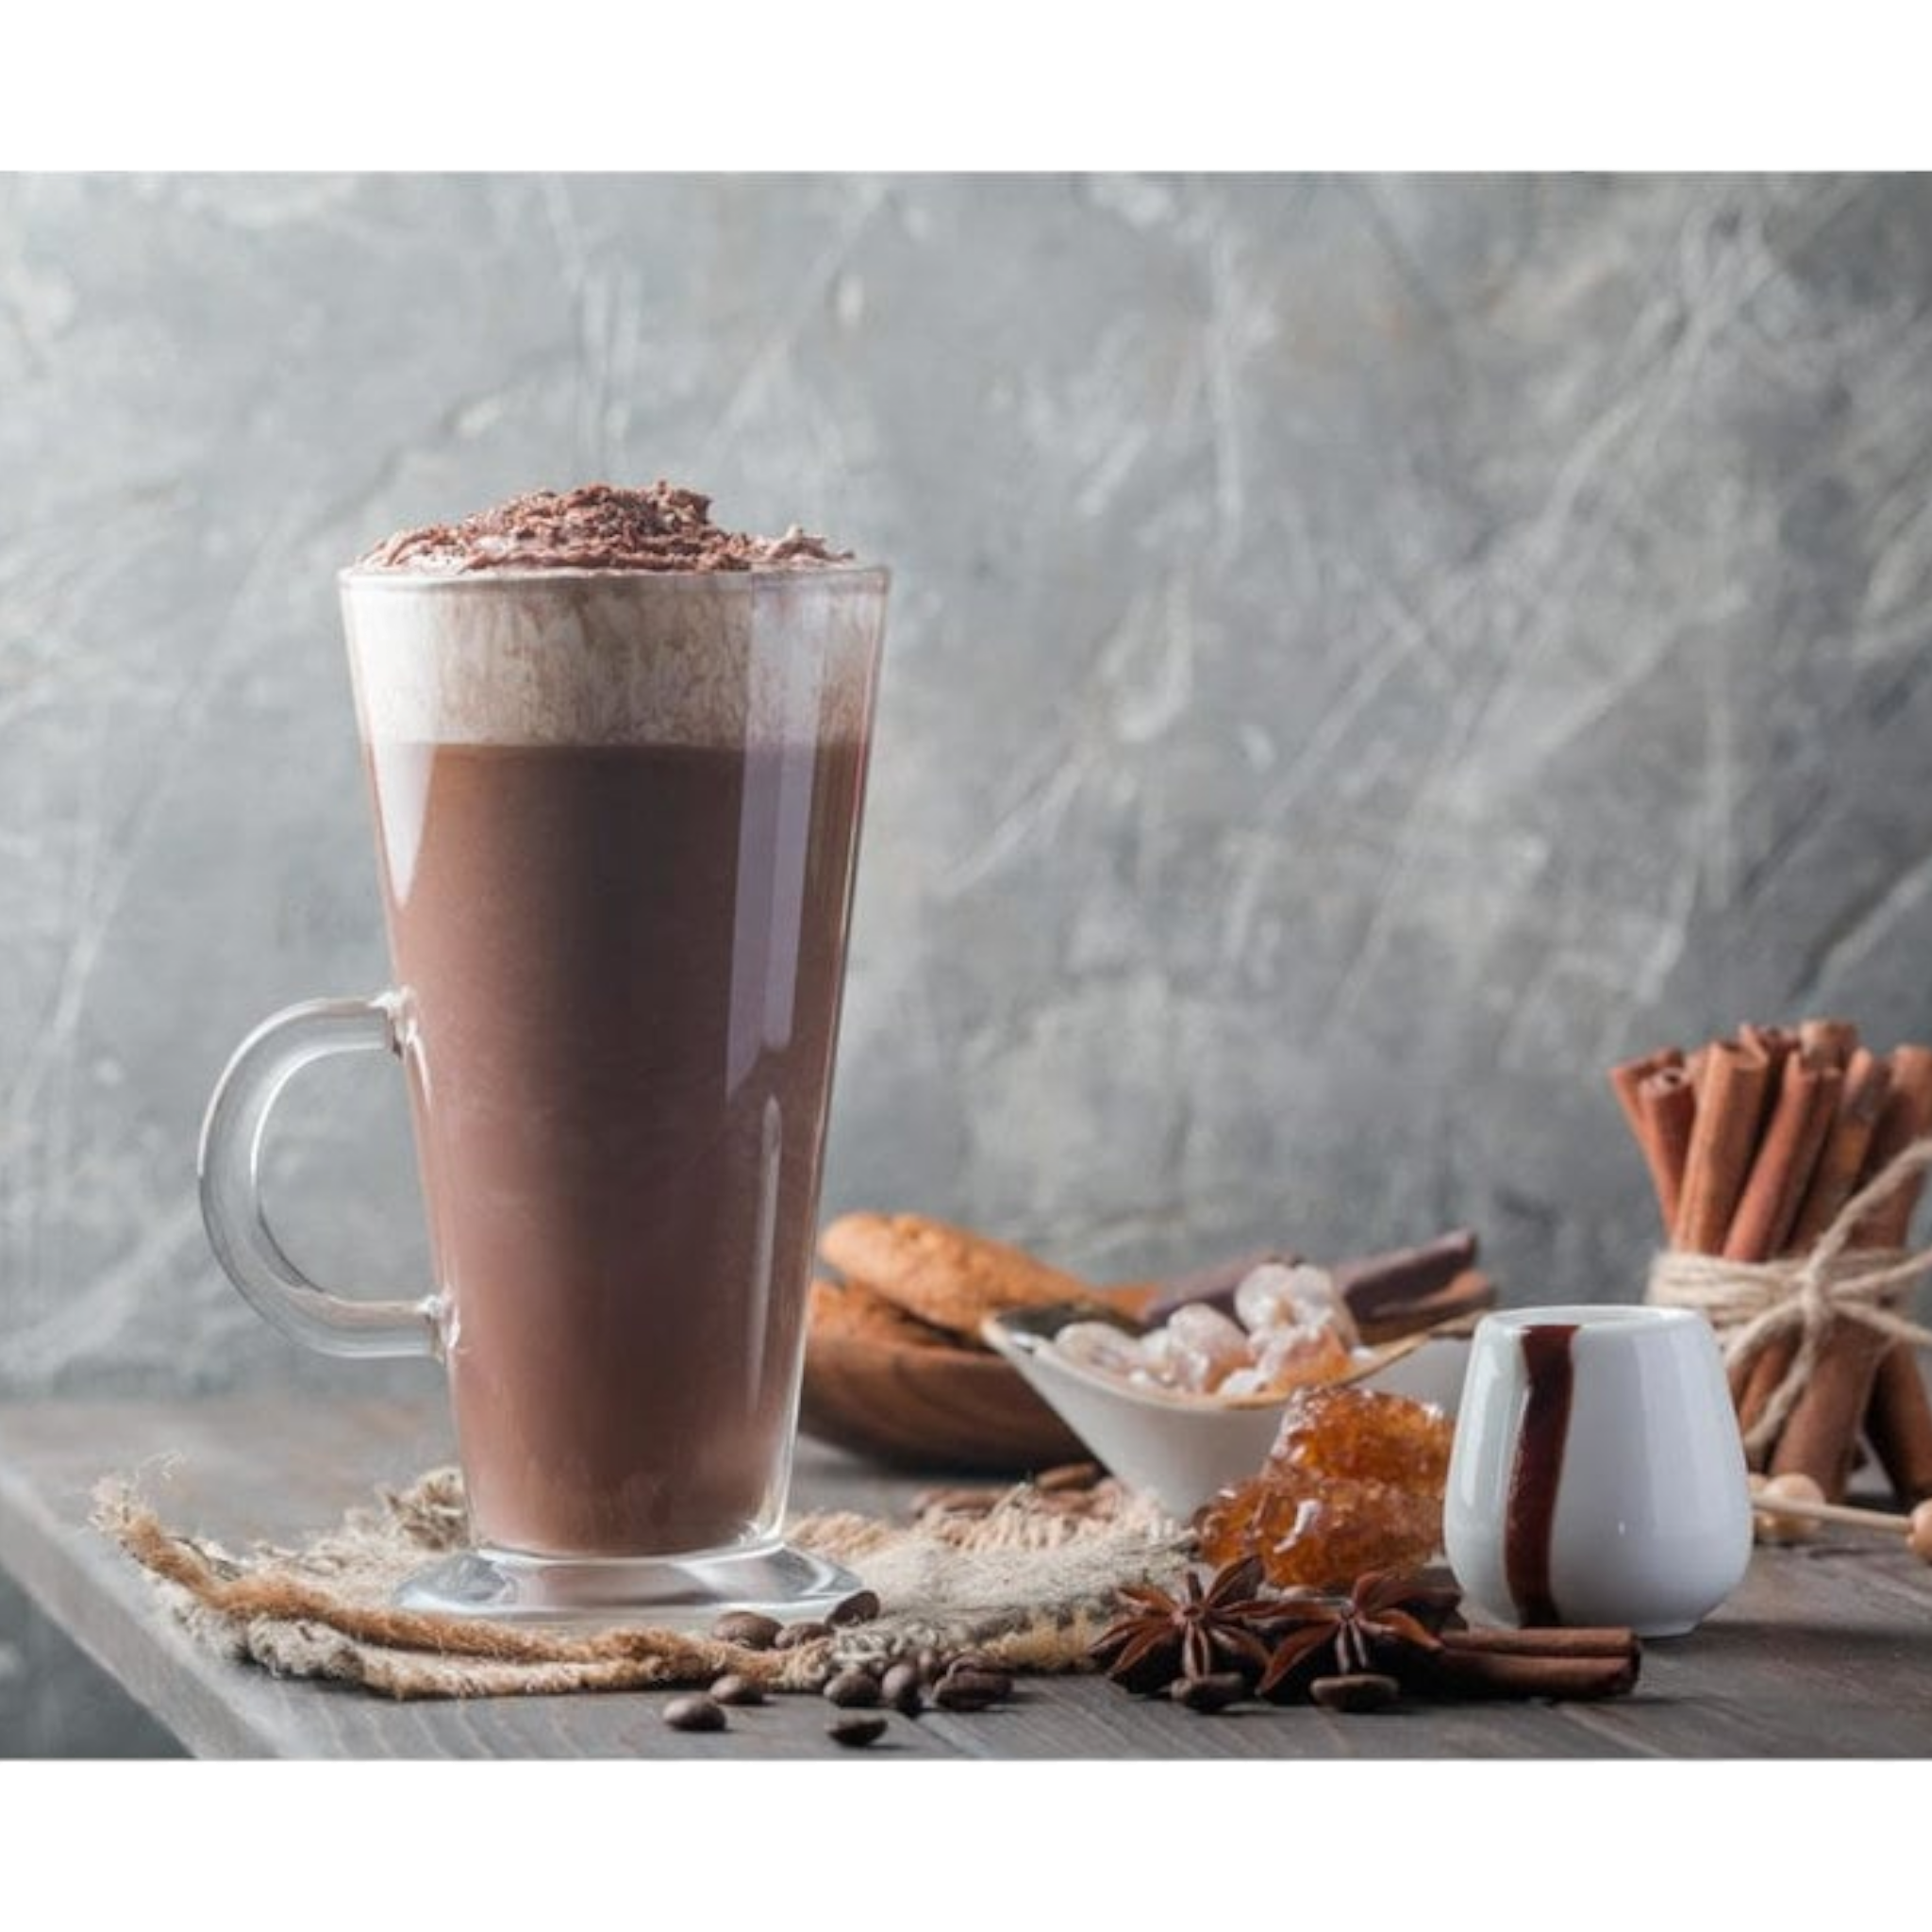 Pasabahce Colombian Café Latte Coffee Mug 265ml 2pcs 23086